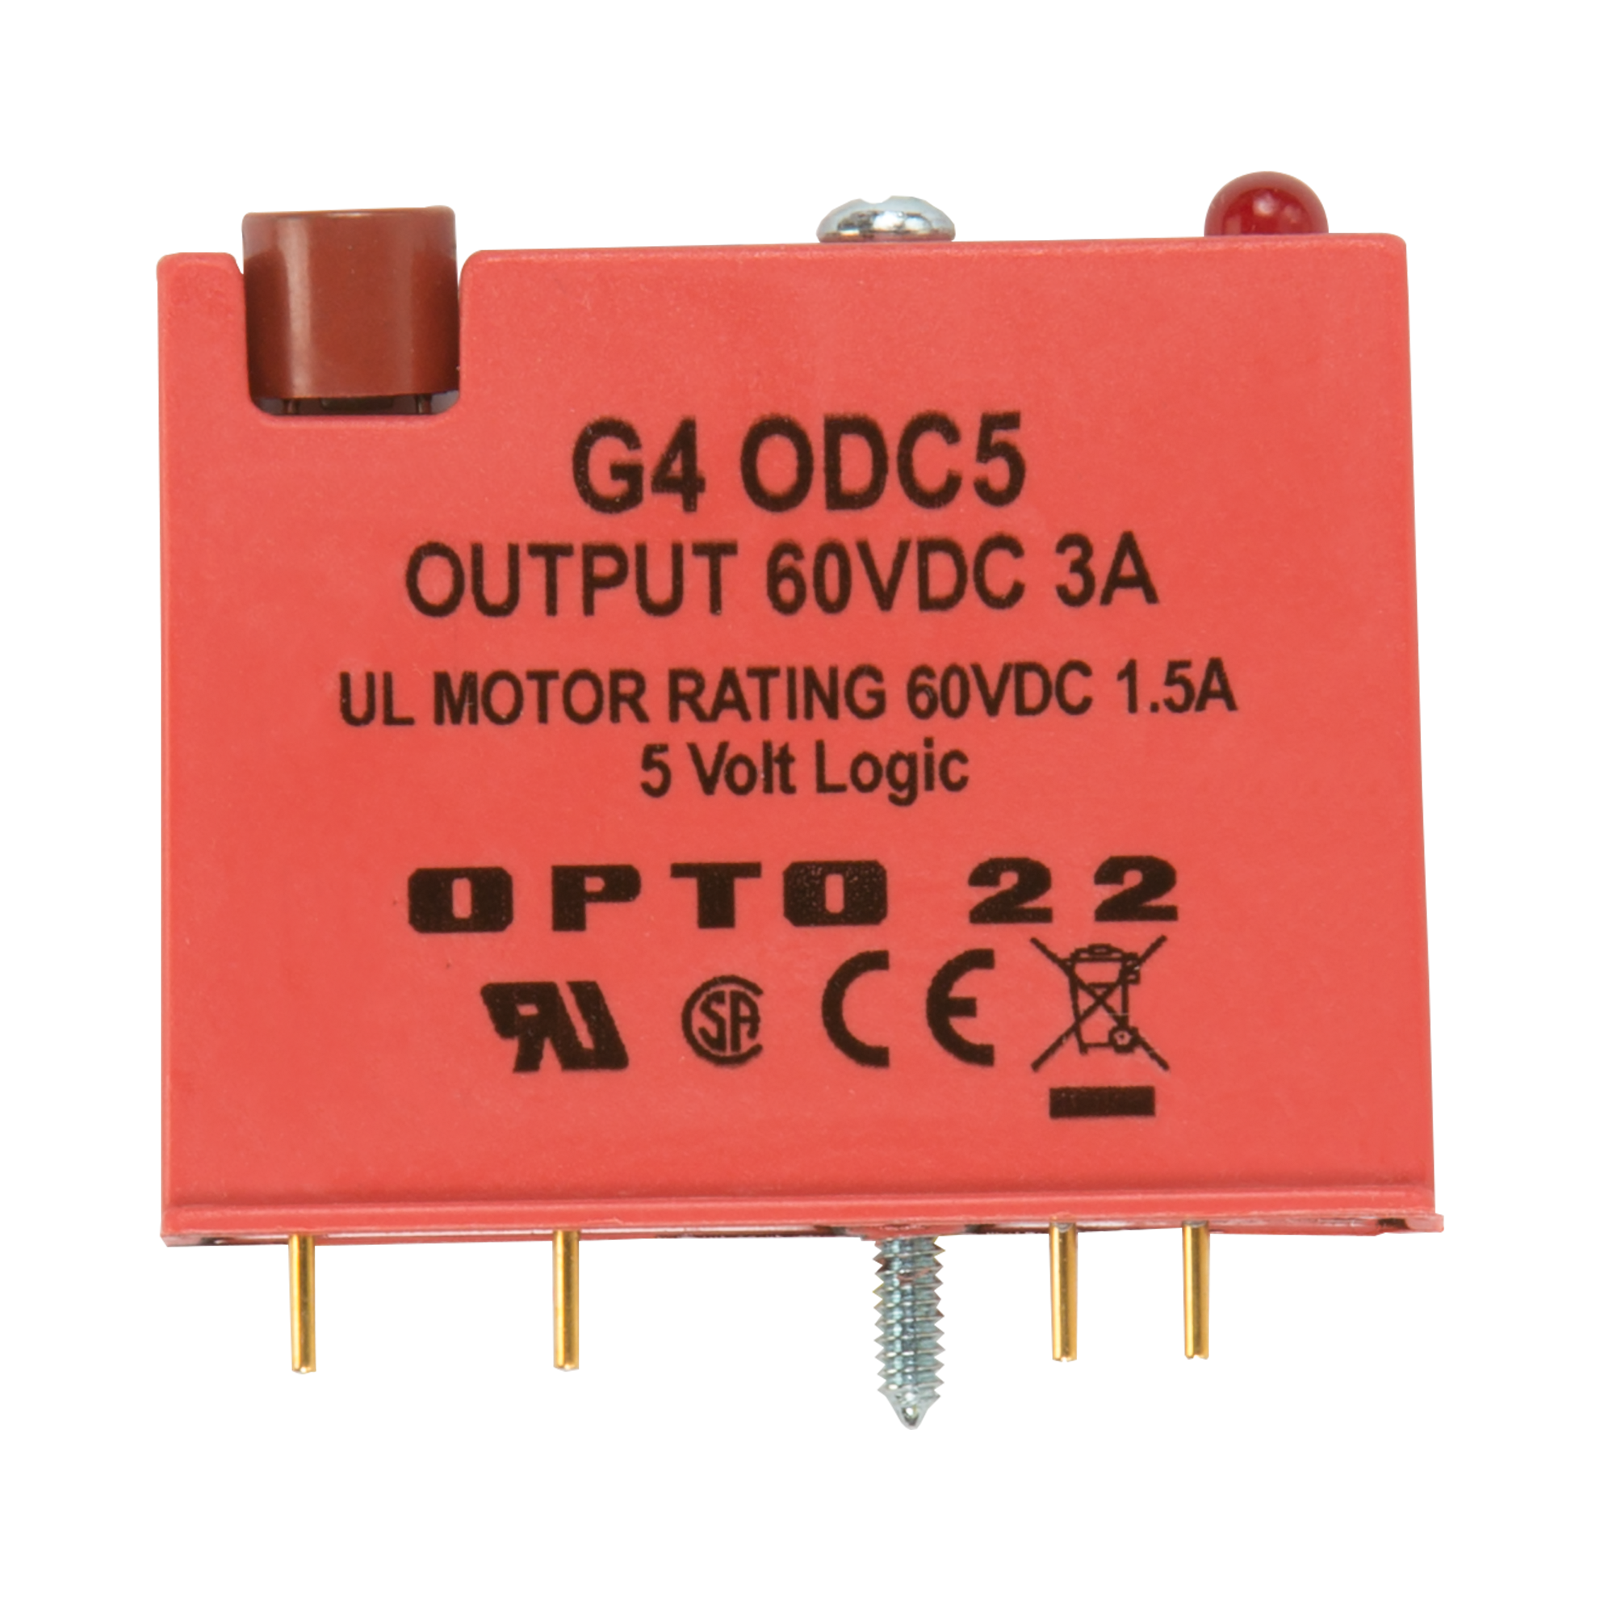 Opto 22 G4 ODC5 Digital Output Module-Lot de 10-volts I/O Isolation 